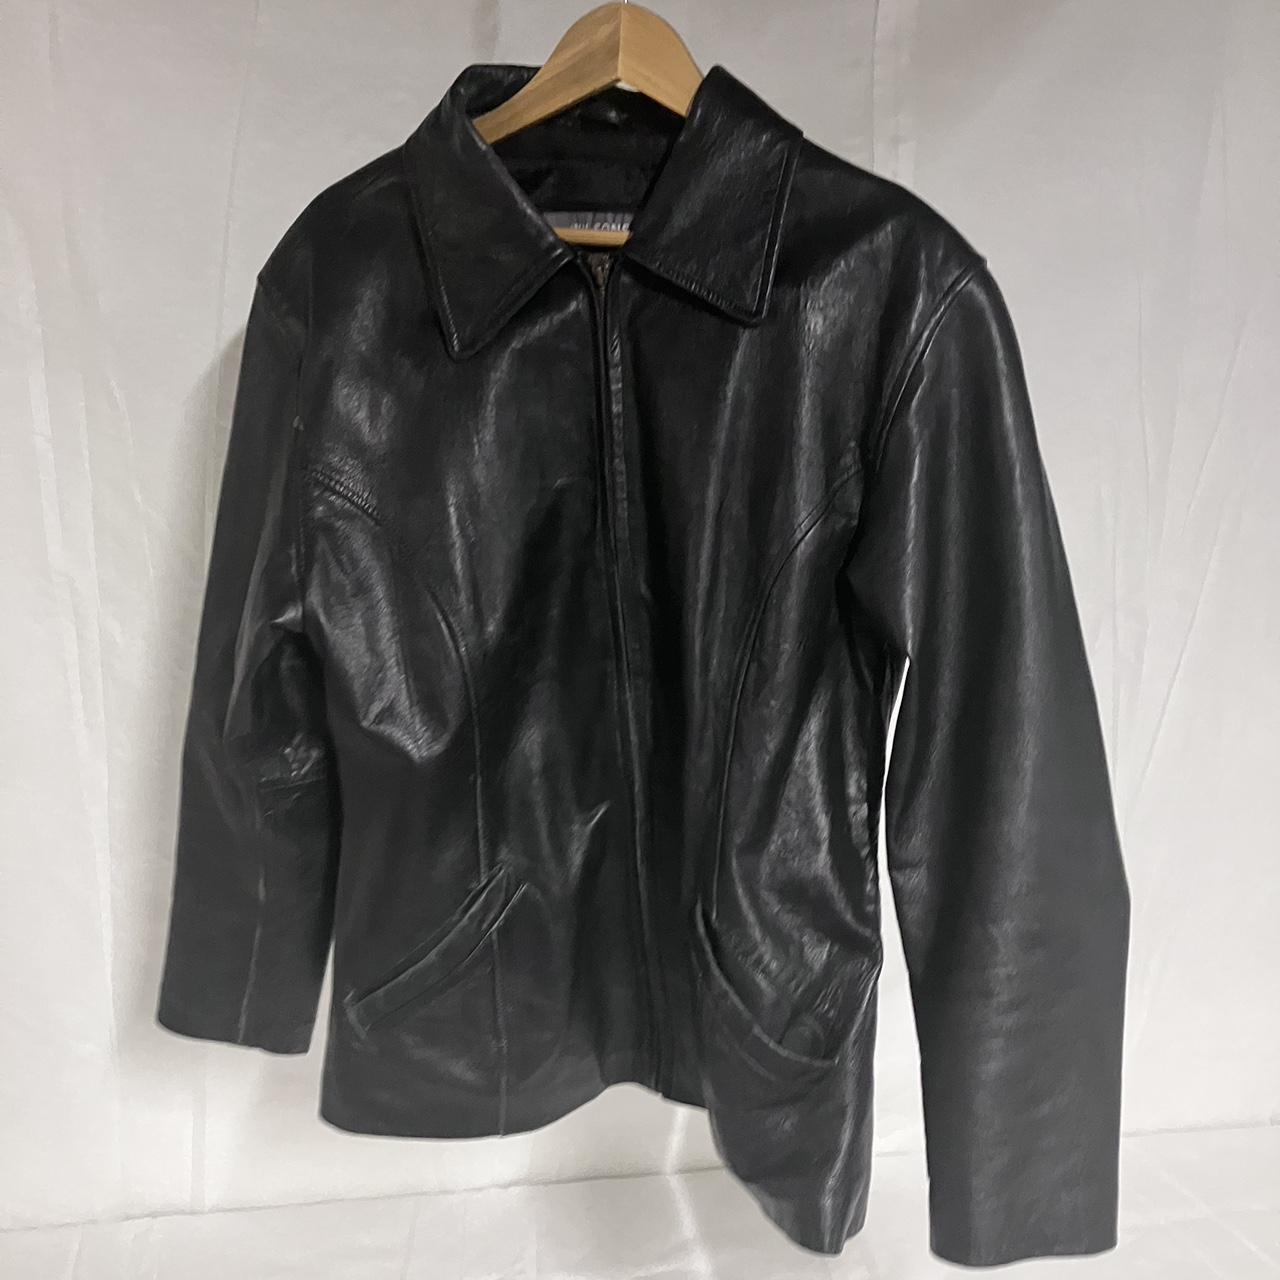 Vintage Wilson’s Leather jacket Size XL - measures... - Depop